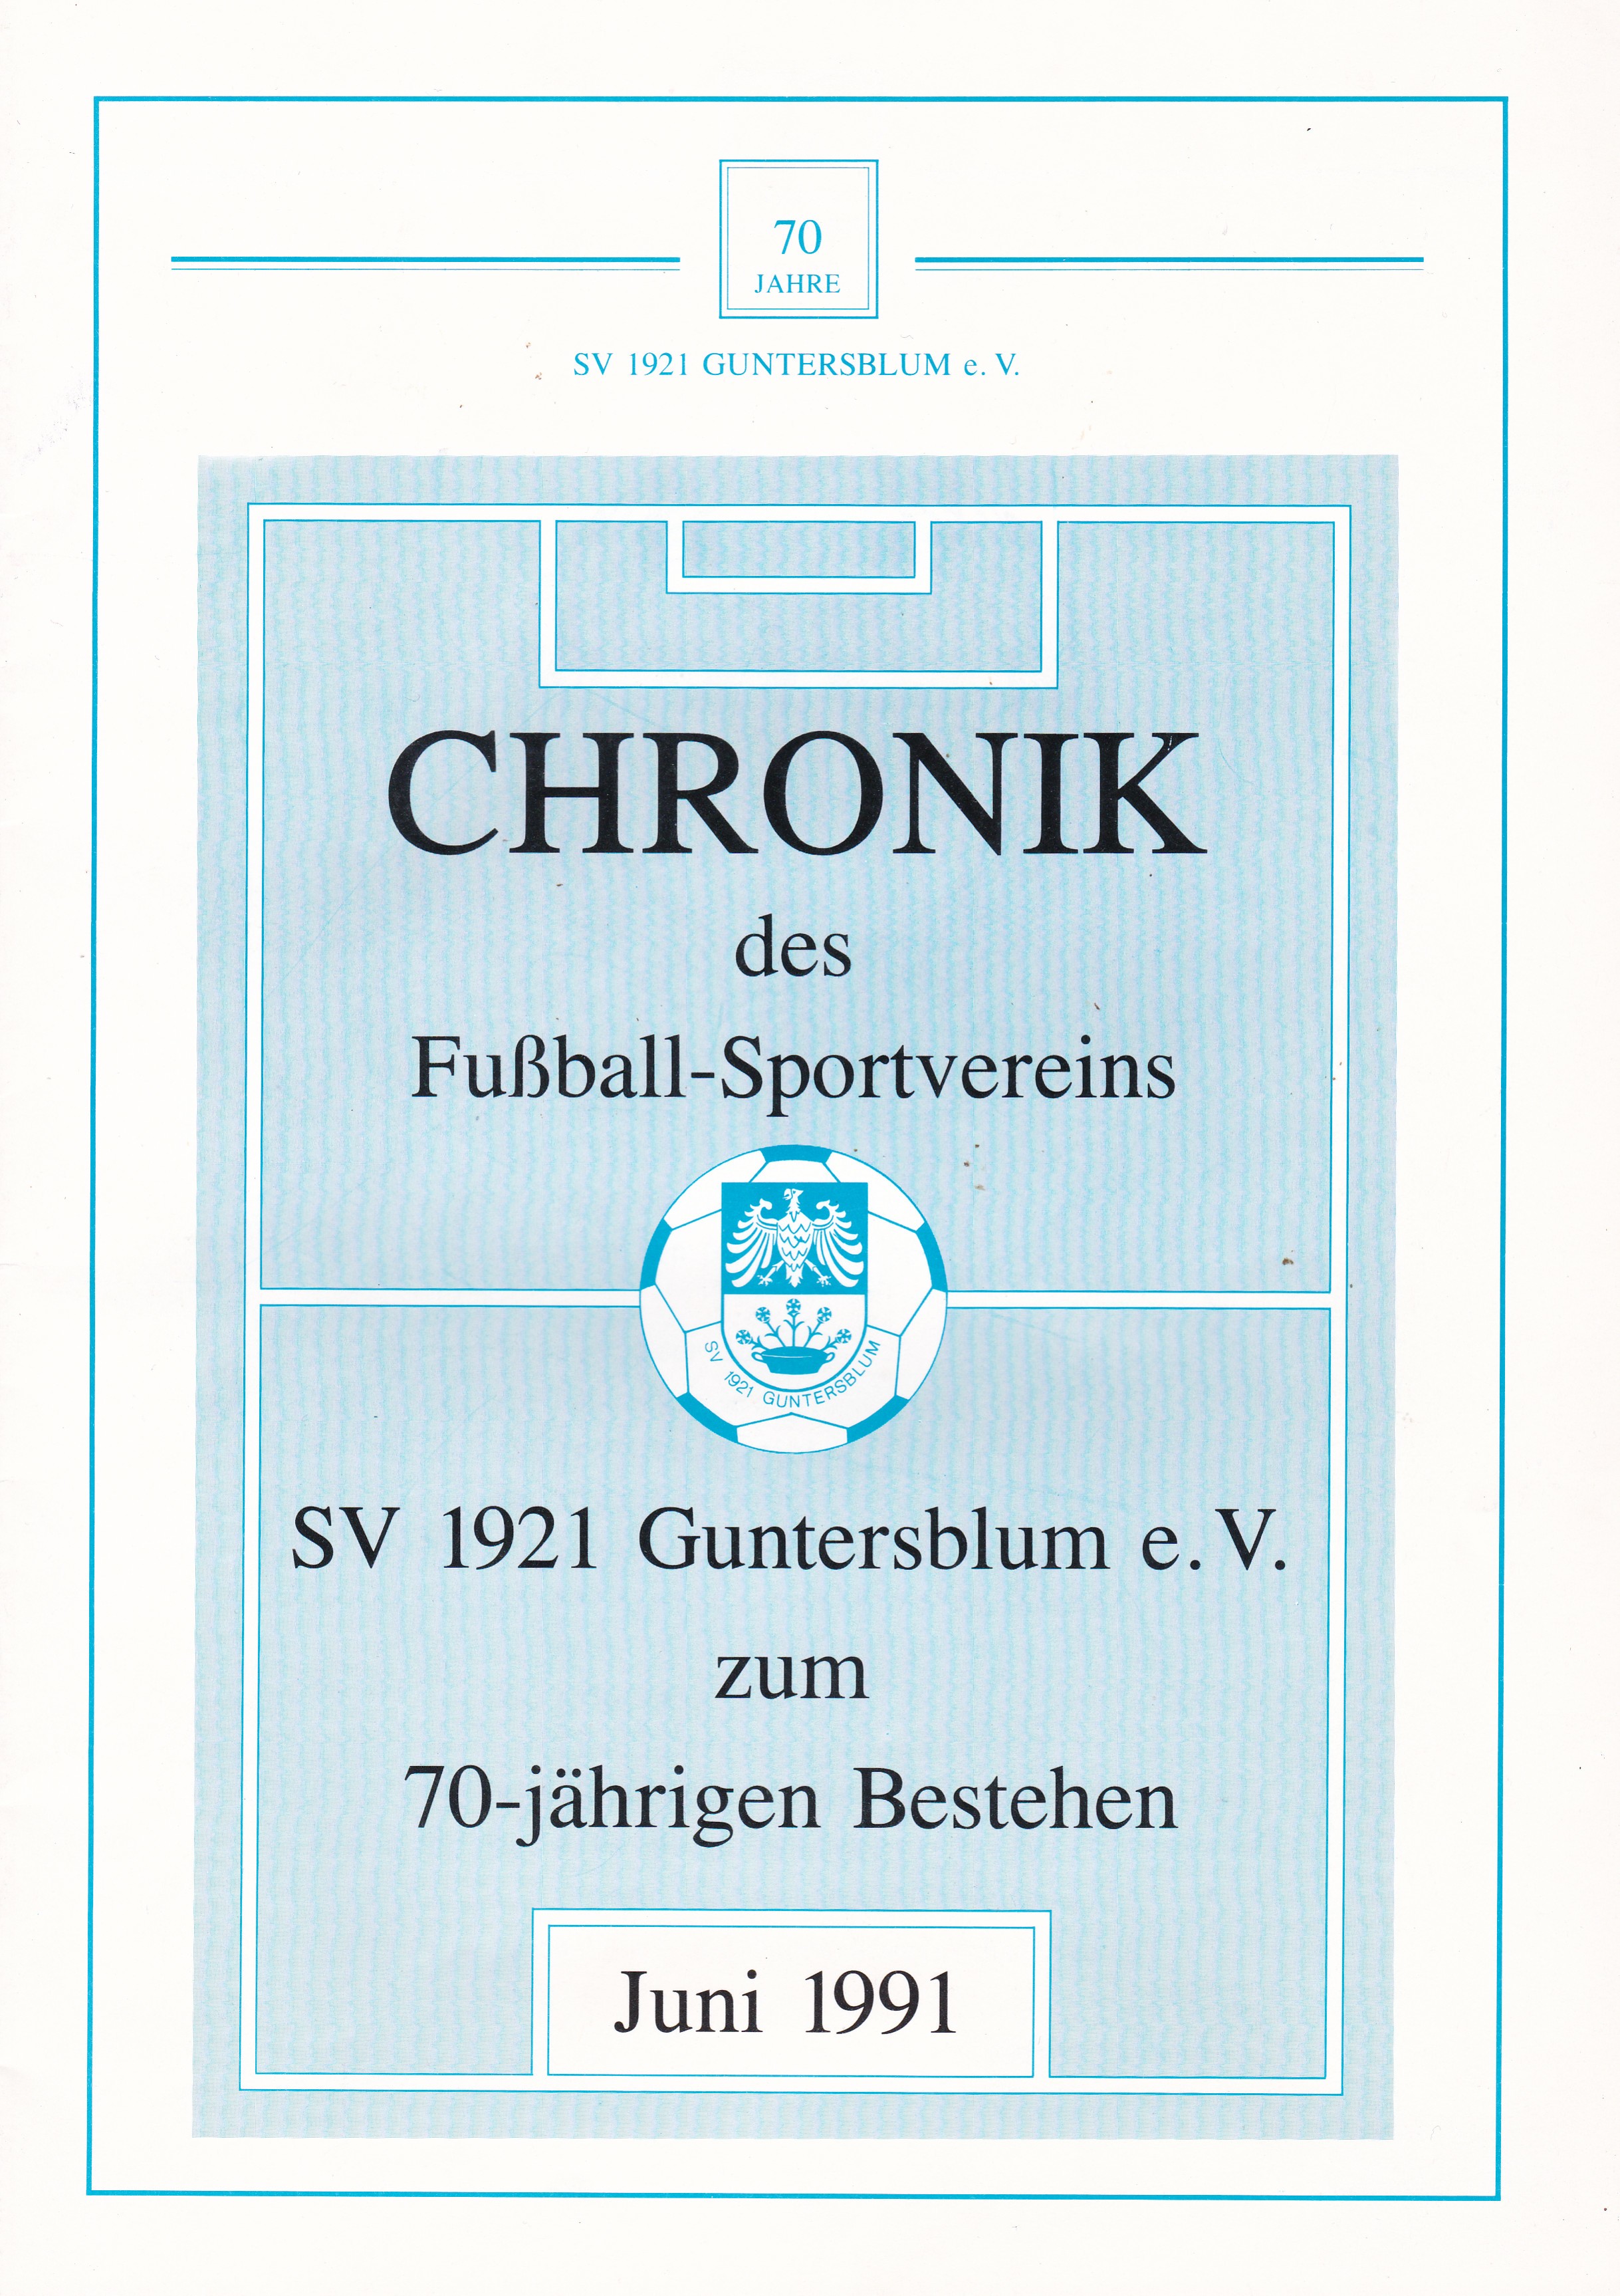 Chronik der Fußball-Sportvereins SV 1921 Guntersblum e.V. (Museum Guntersblum  im Kellerweg 20 CC BY-NC-SA)